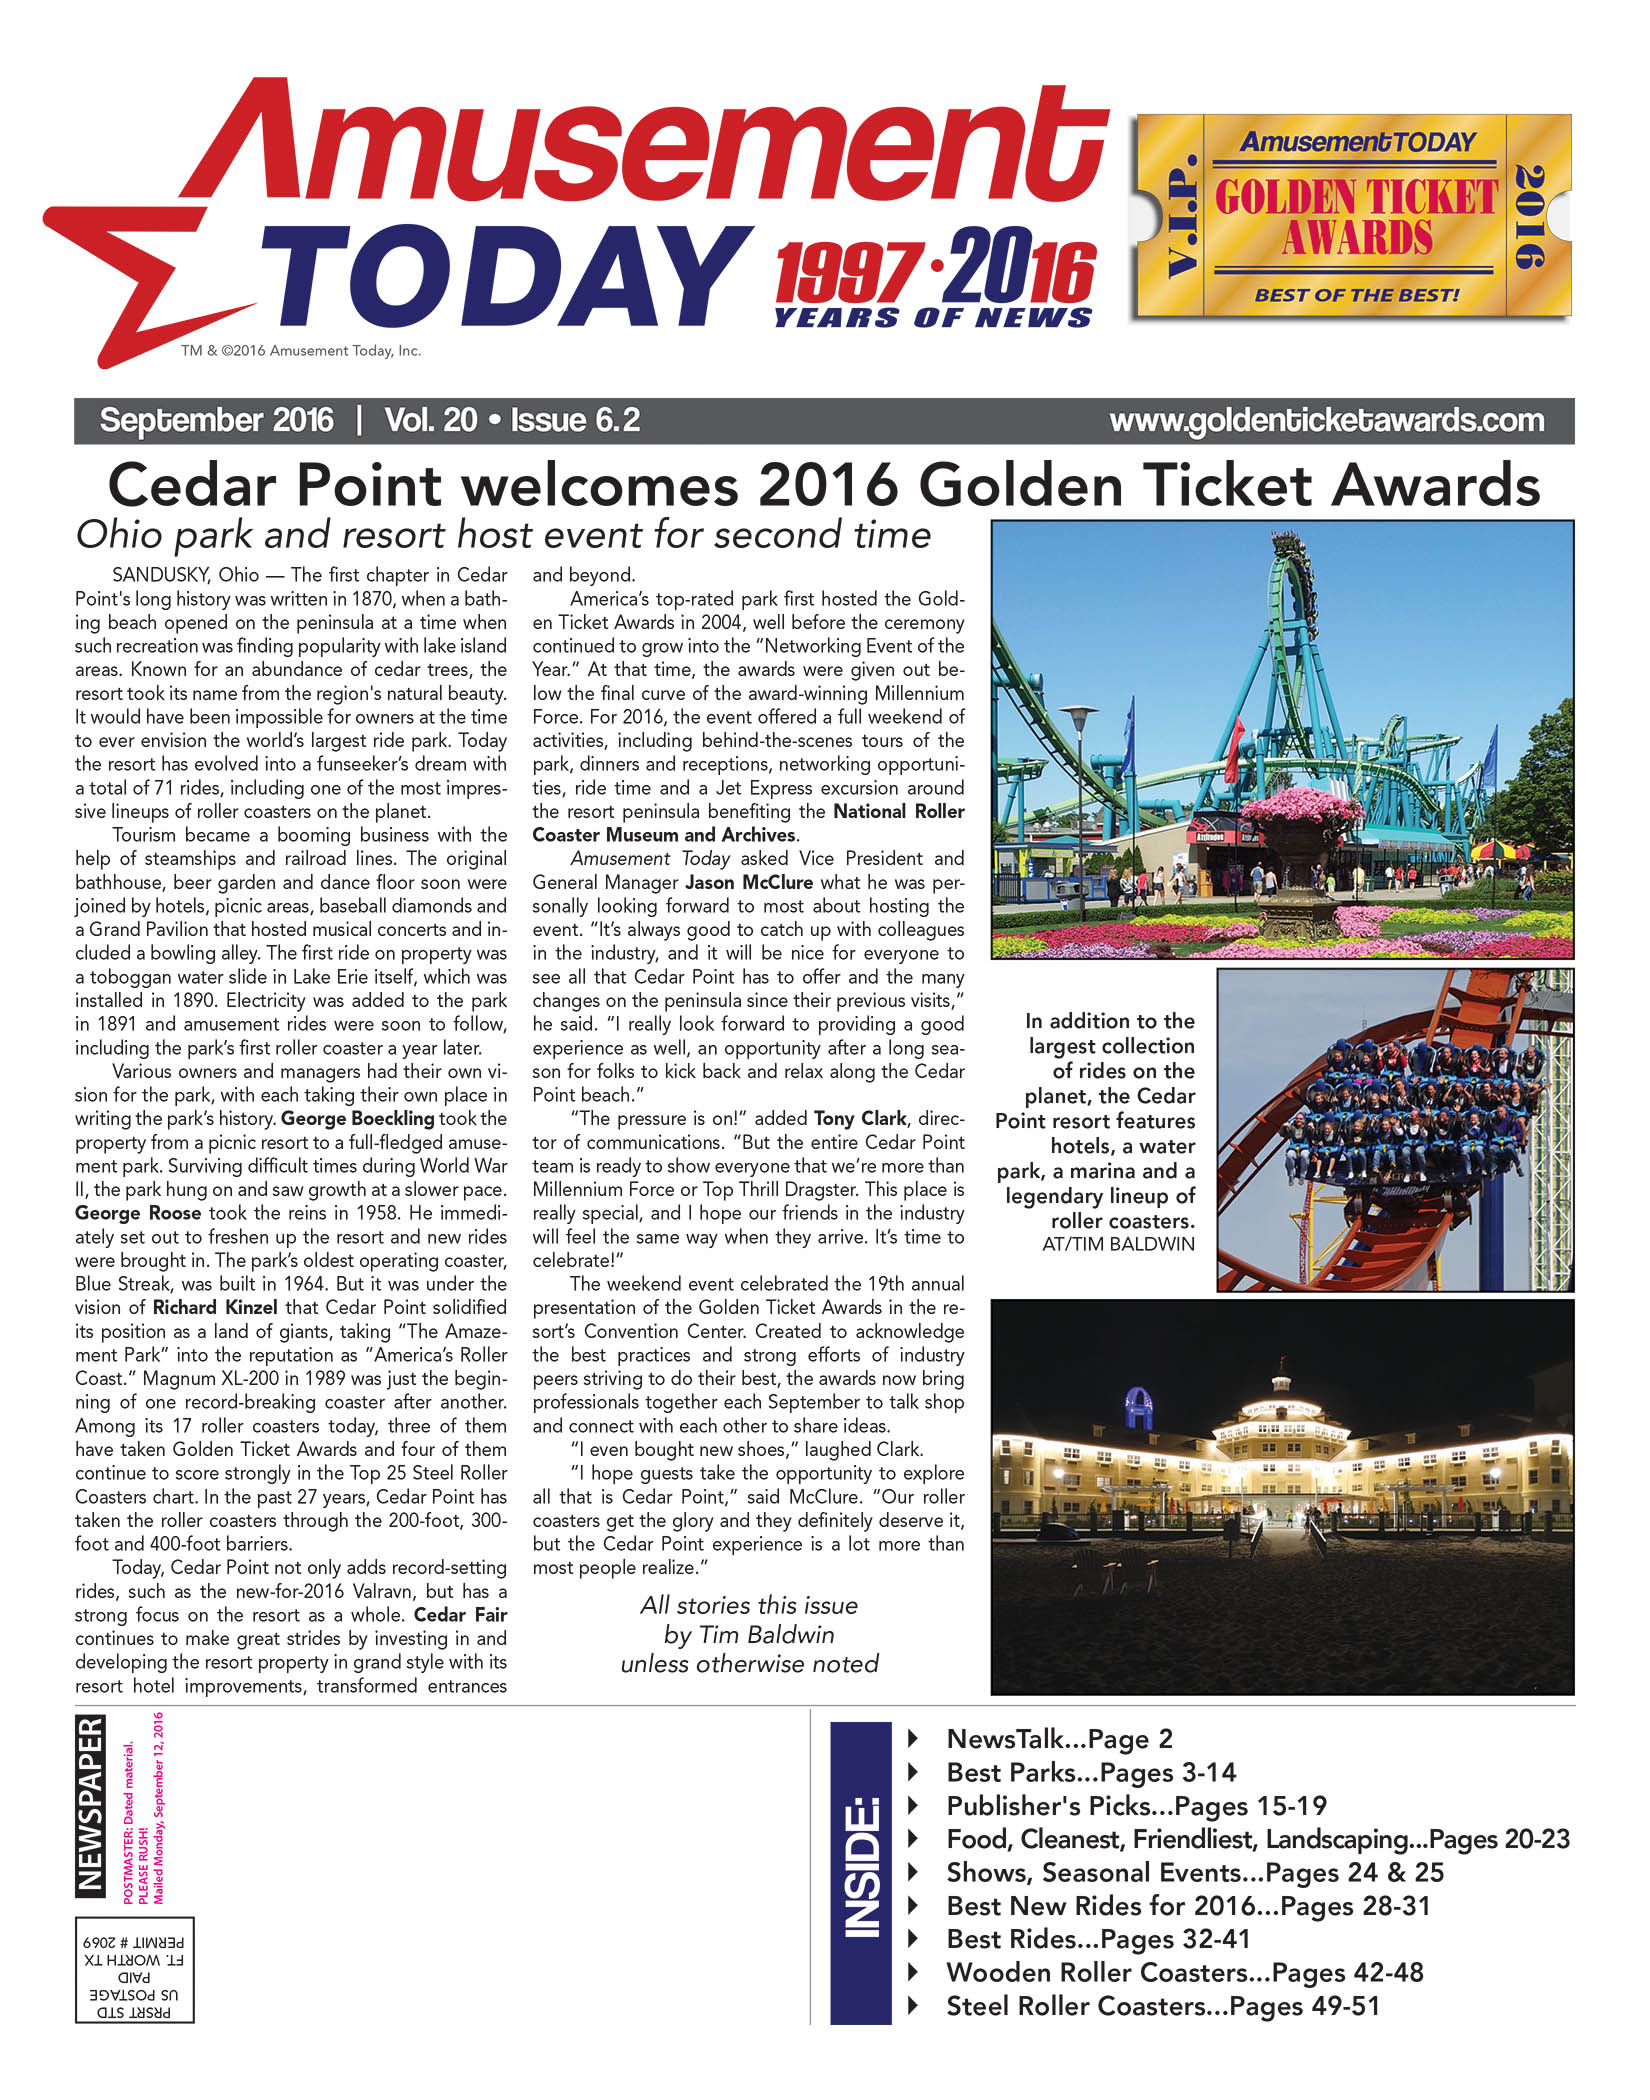 theme park insider awards News & Updates 